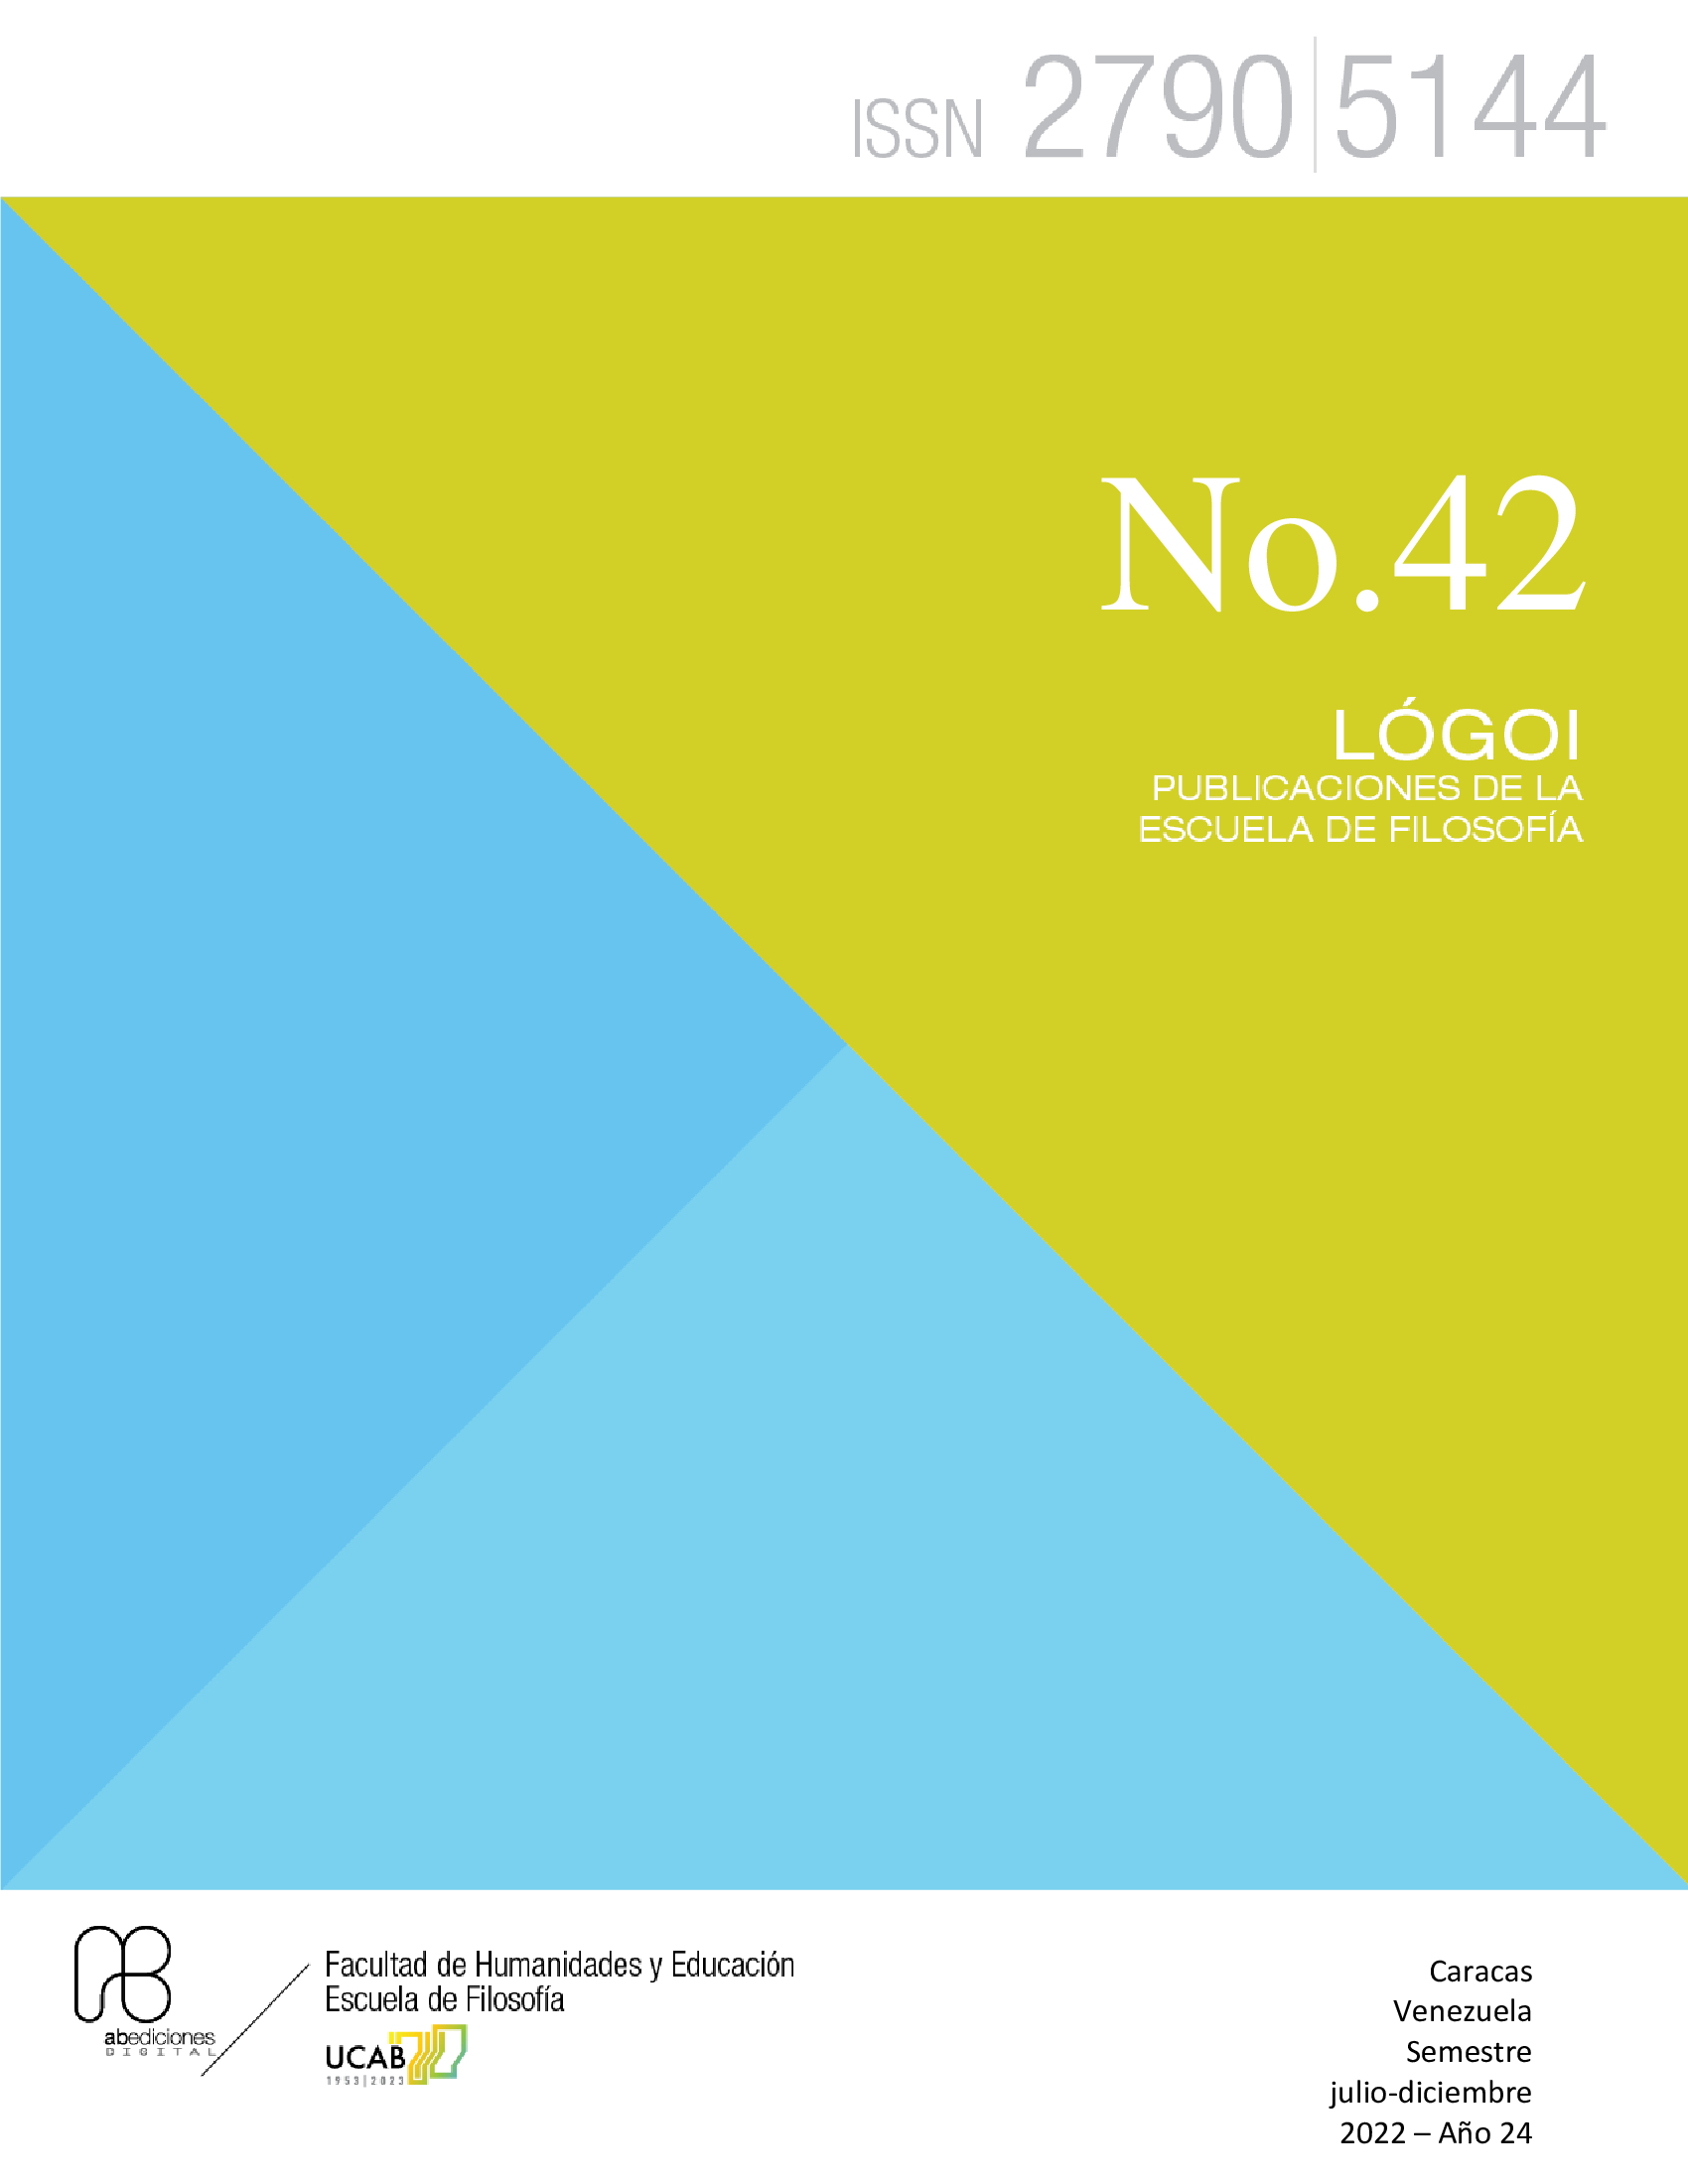 					Ver Núm. 42 (2022): Núm. 42 (2022) julio-diciembre 2022. Lógoi. Revista de Filosofía
				